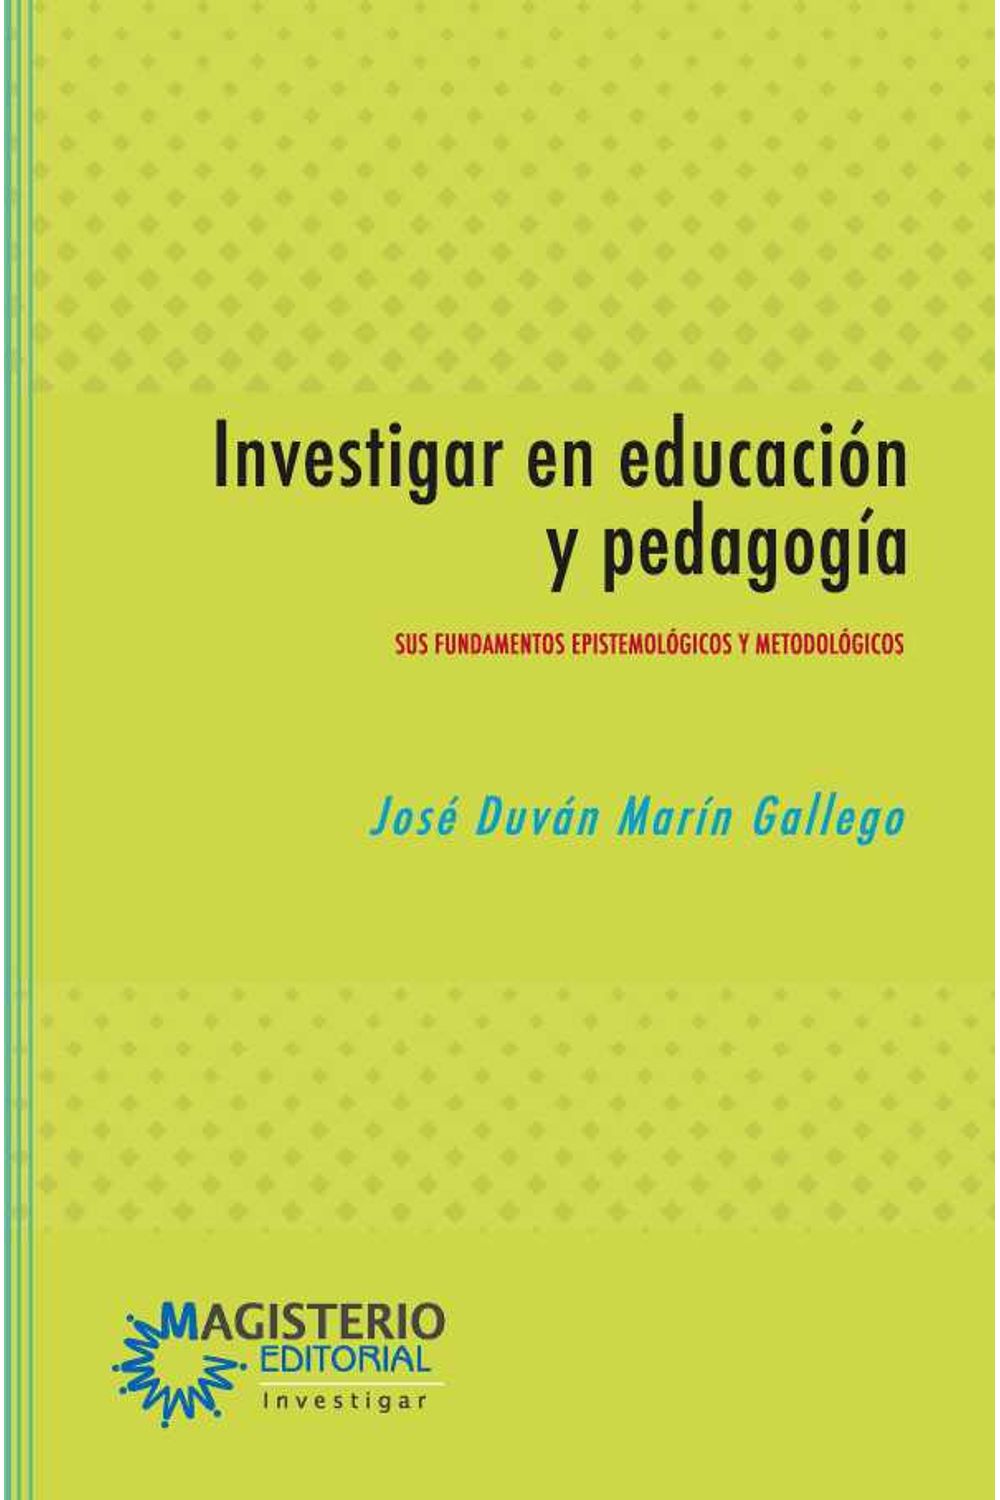 bm-investigar-en-educacion-y-pedagogia-cooperativa-editorial-magisterio-9789582012960